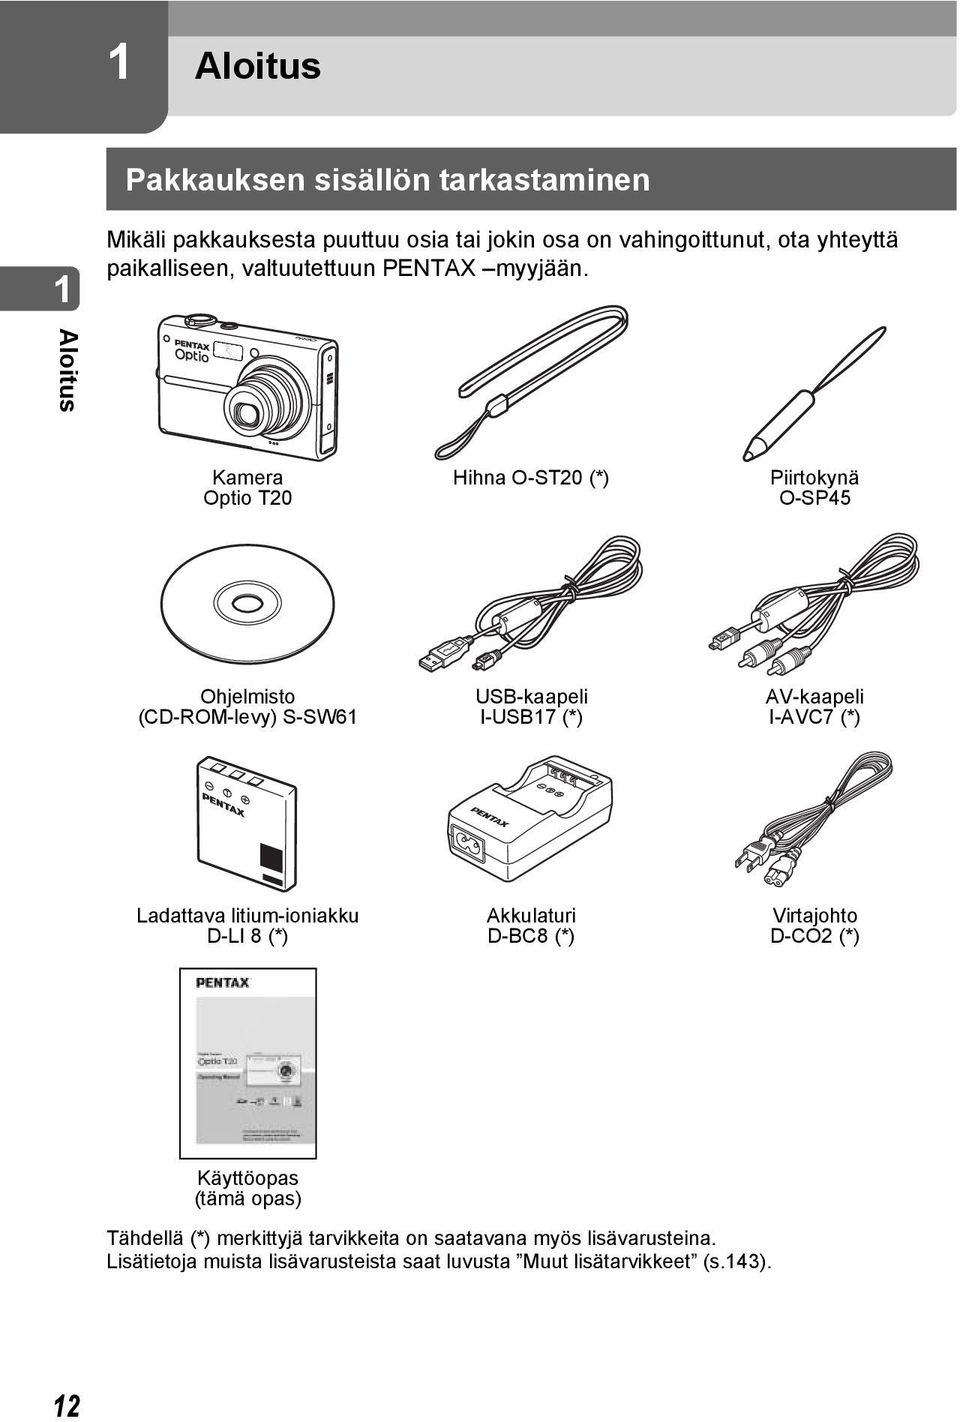 Aloitus Kamera Optio T20 Hihna O-ST20 (*) Piirtokynä O-SP45 Ohjelmisto (CD-ROM-levy) S-SW61 USB-kaapeli I-USB17 (*) AV-kaapeli I-AVC7 (*)